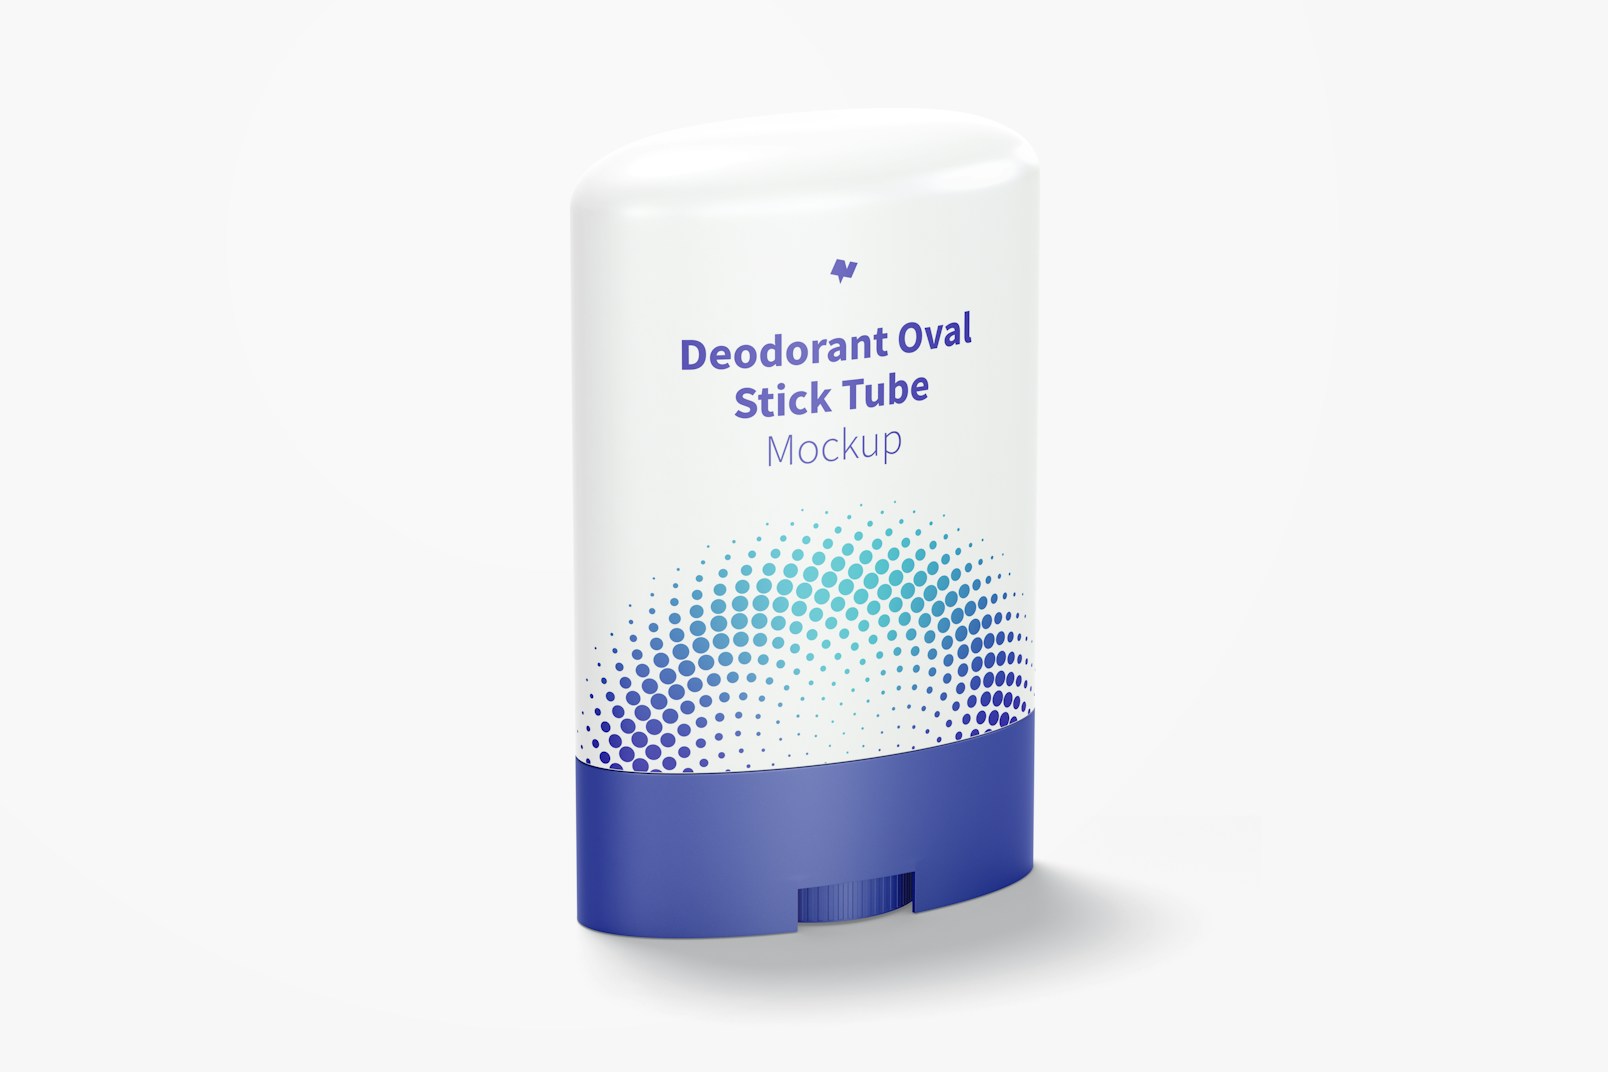 Deodorant Oval Stick Tube Mockup